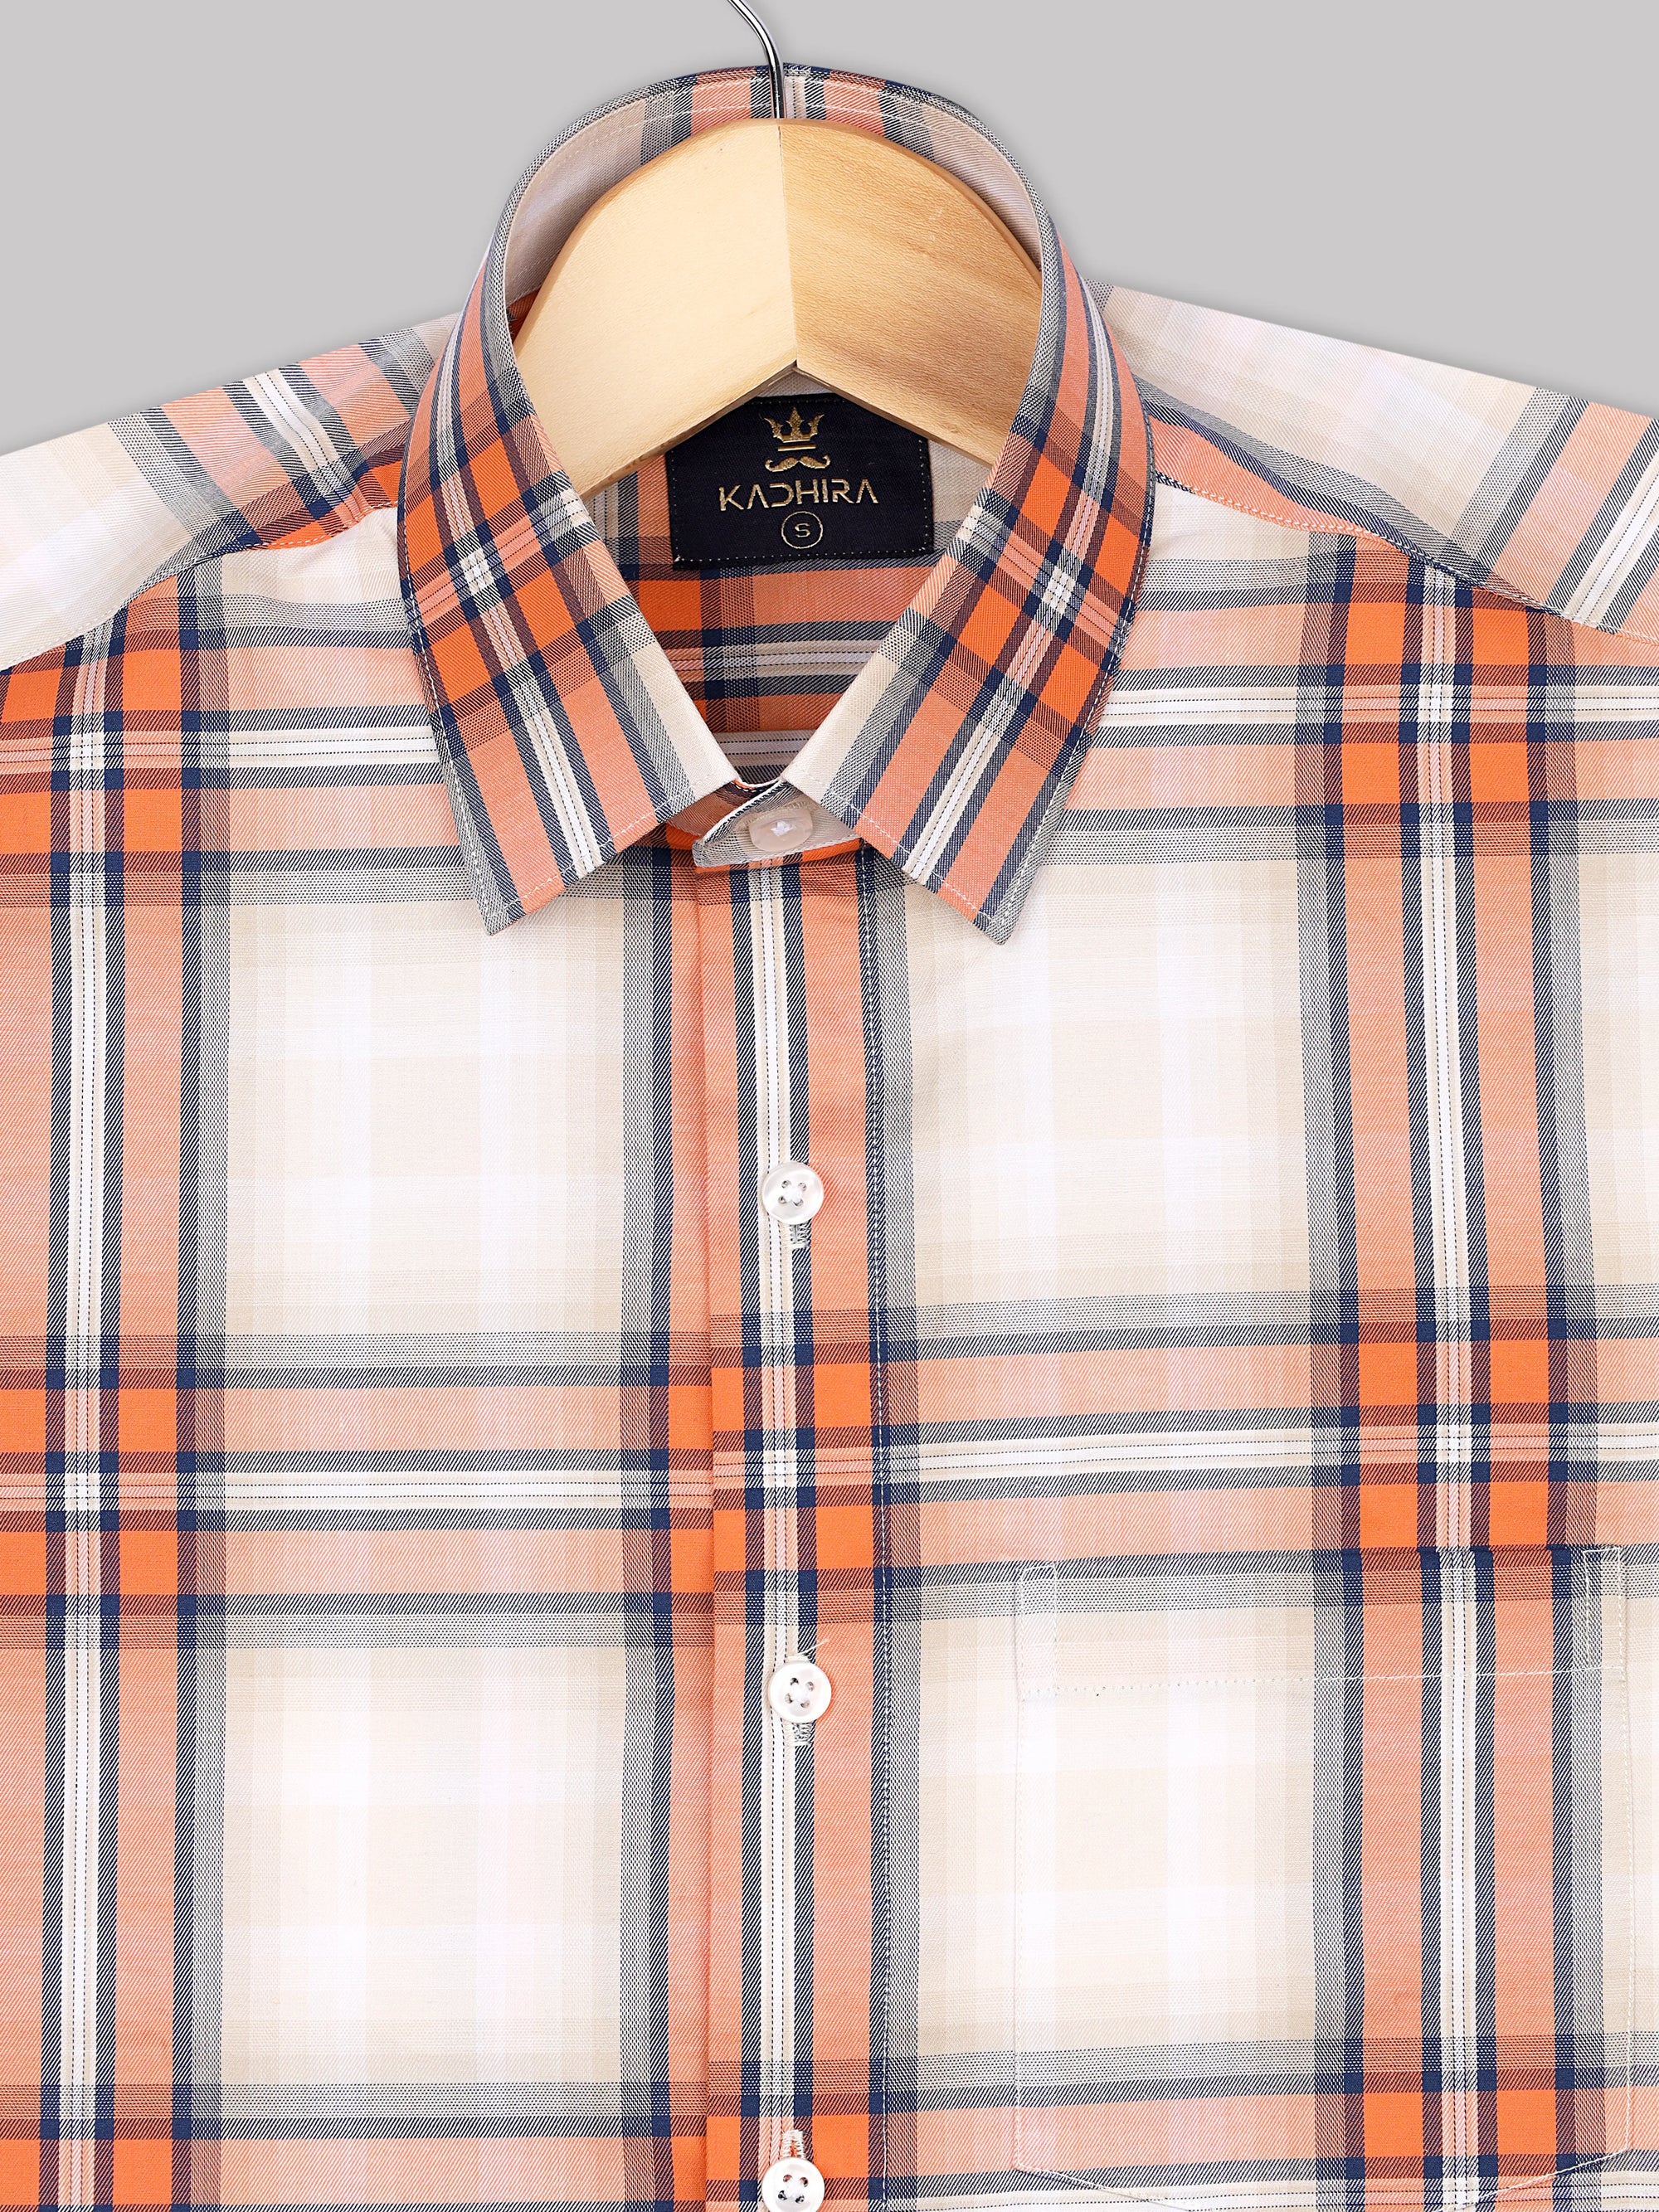 Soft Cream With Orange Dupplin checks Premium Cotton Shirt